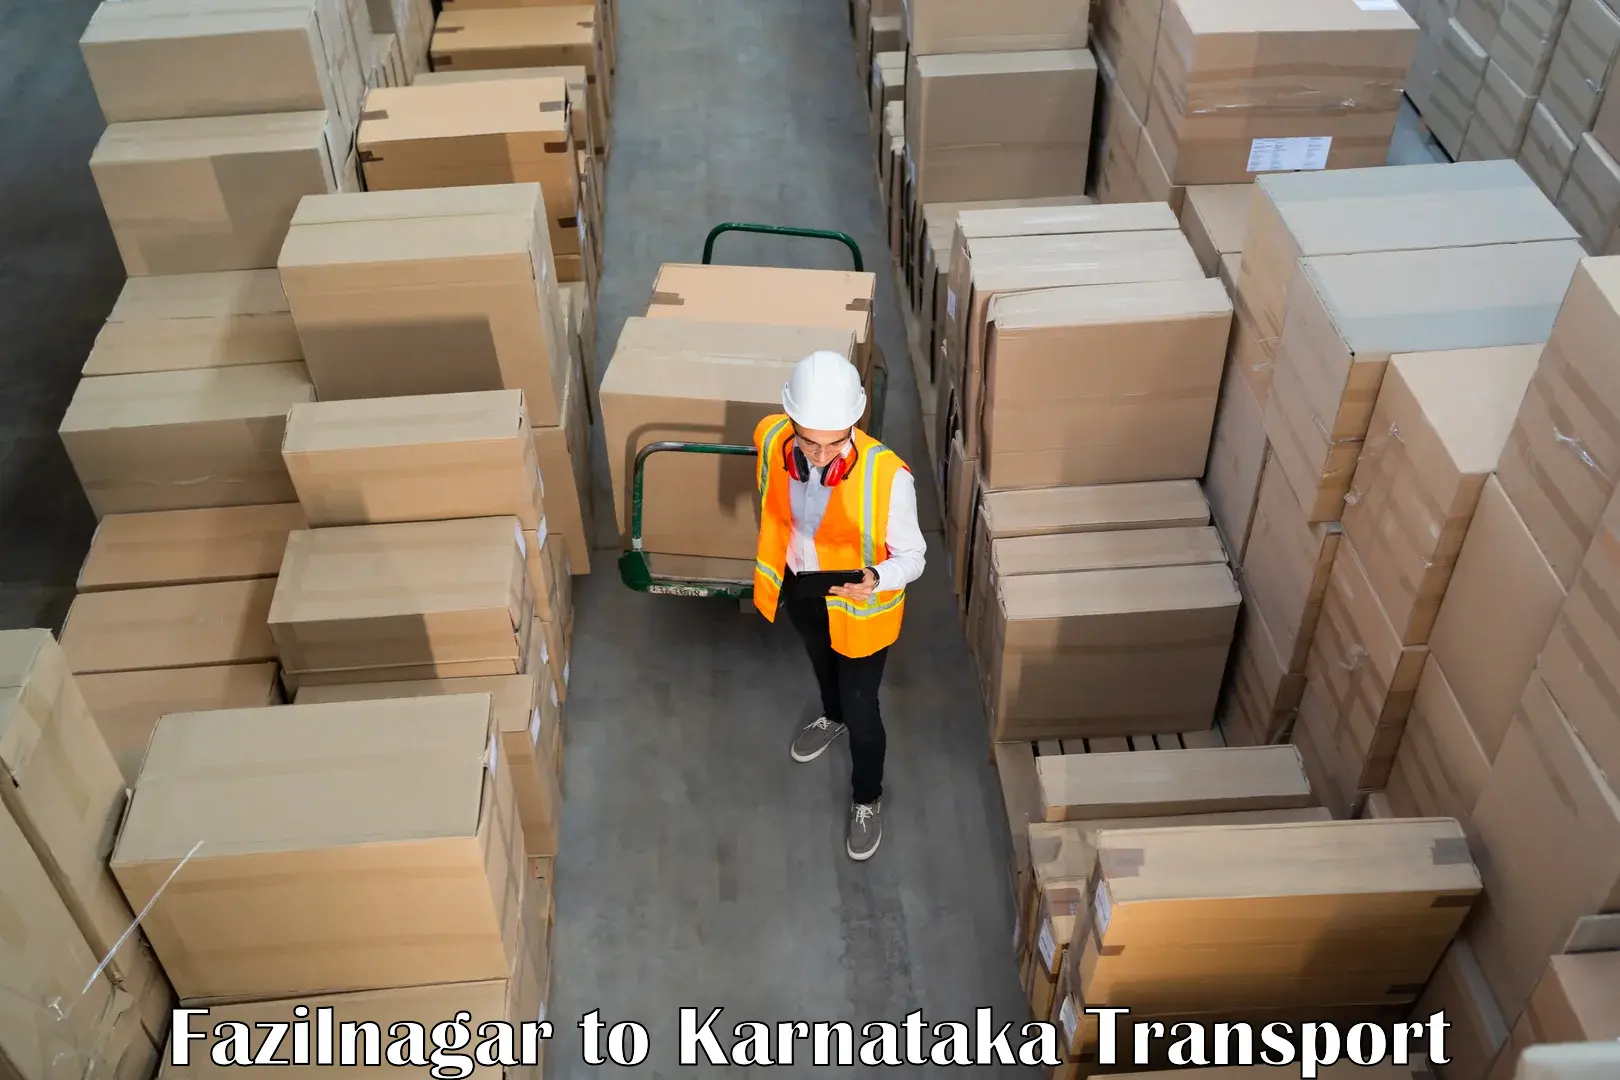 Truck transport companies in India in Fazilnagar to Hunsur